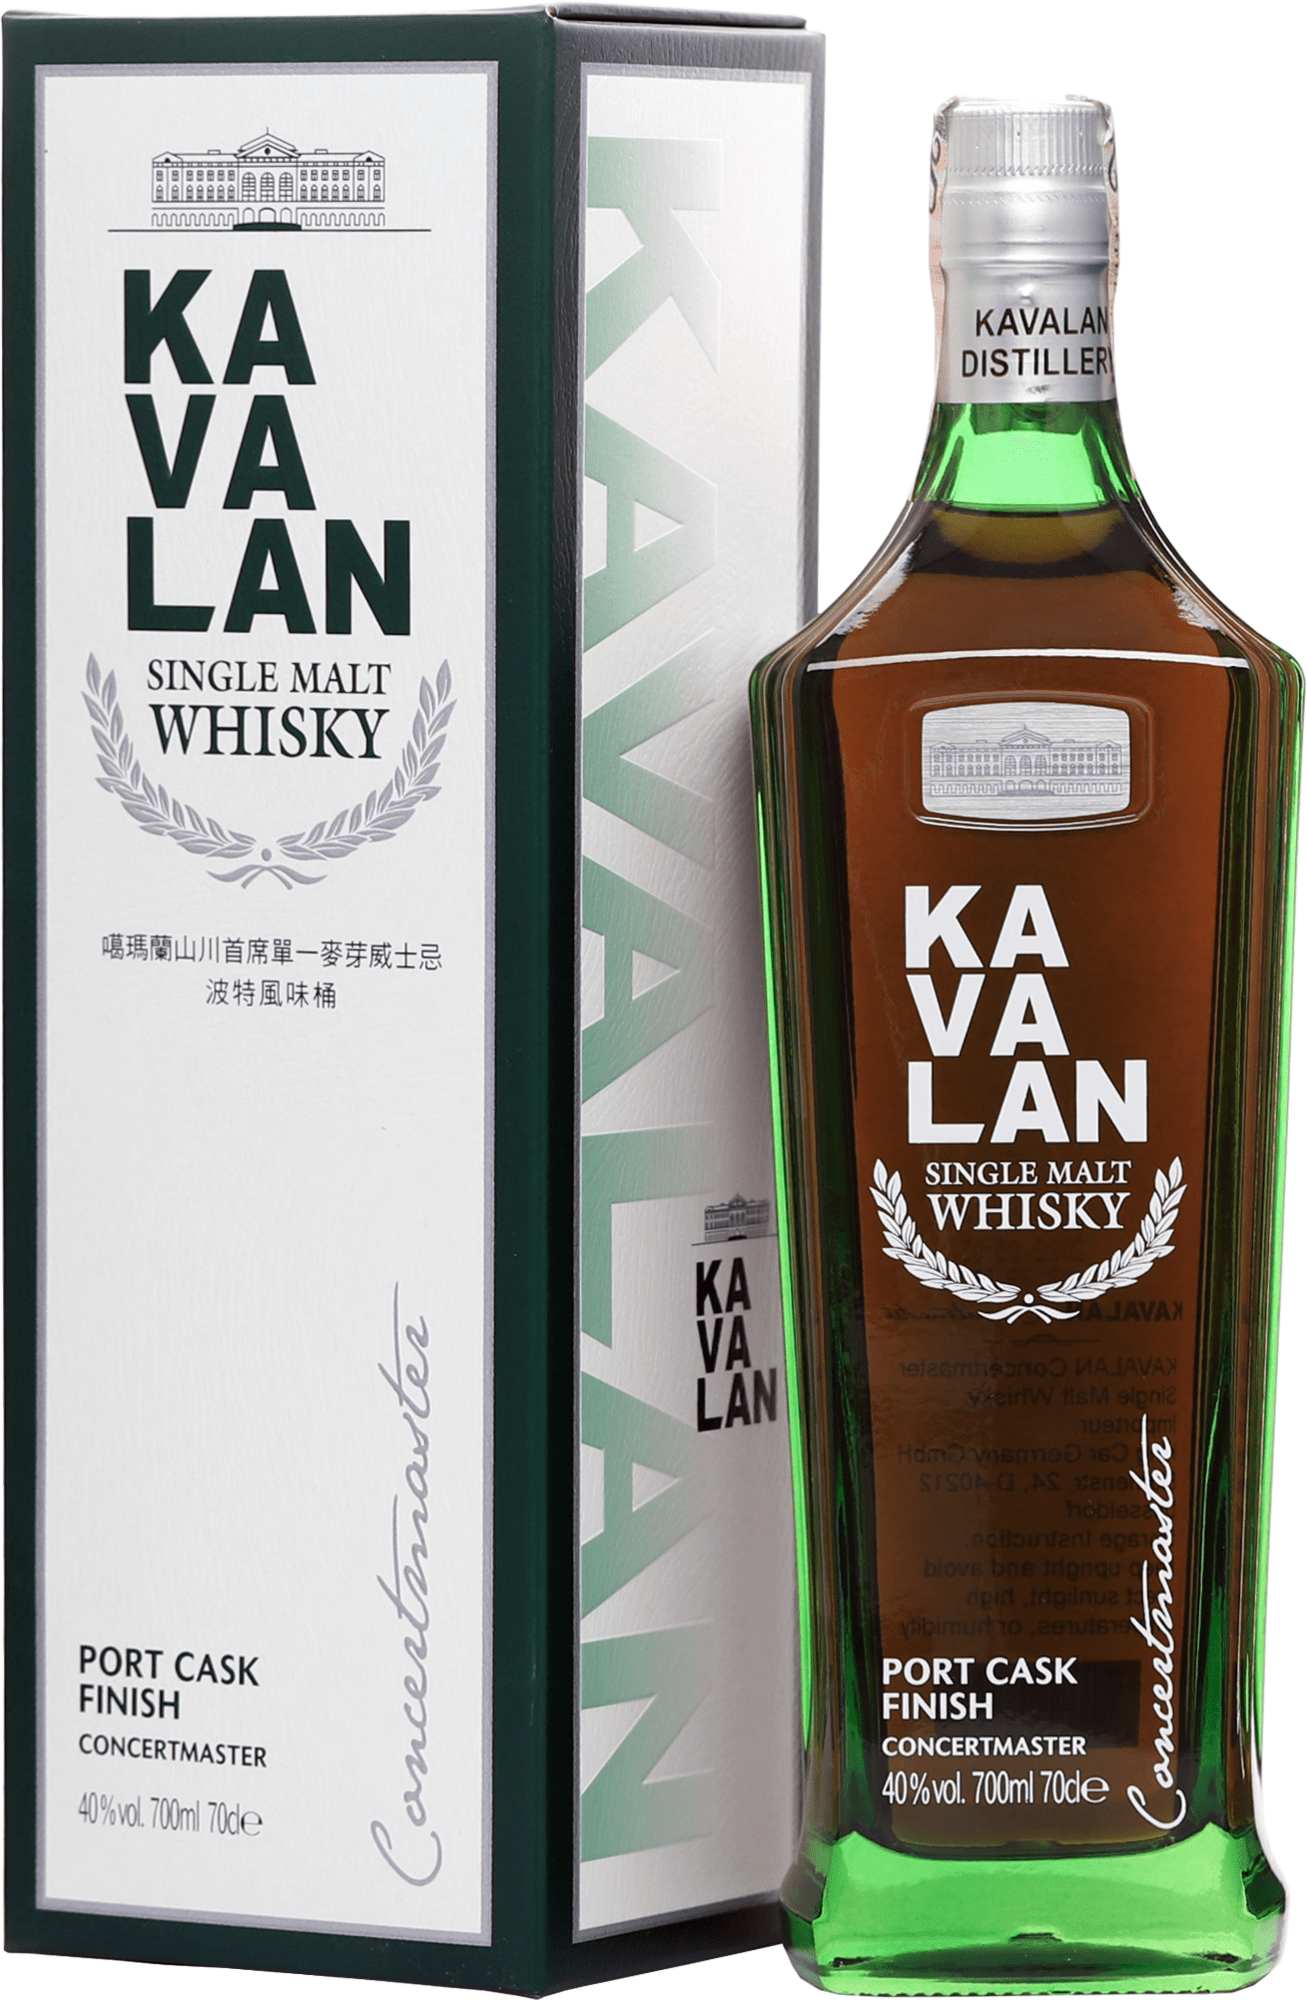 BUY] Kavalan Concertmaster - Port Cask Finish Whiskey